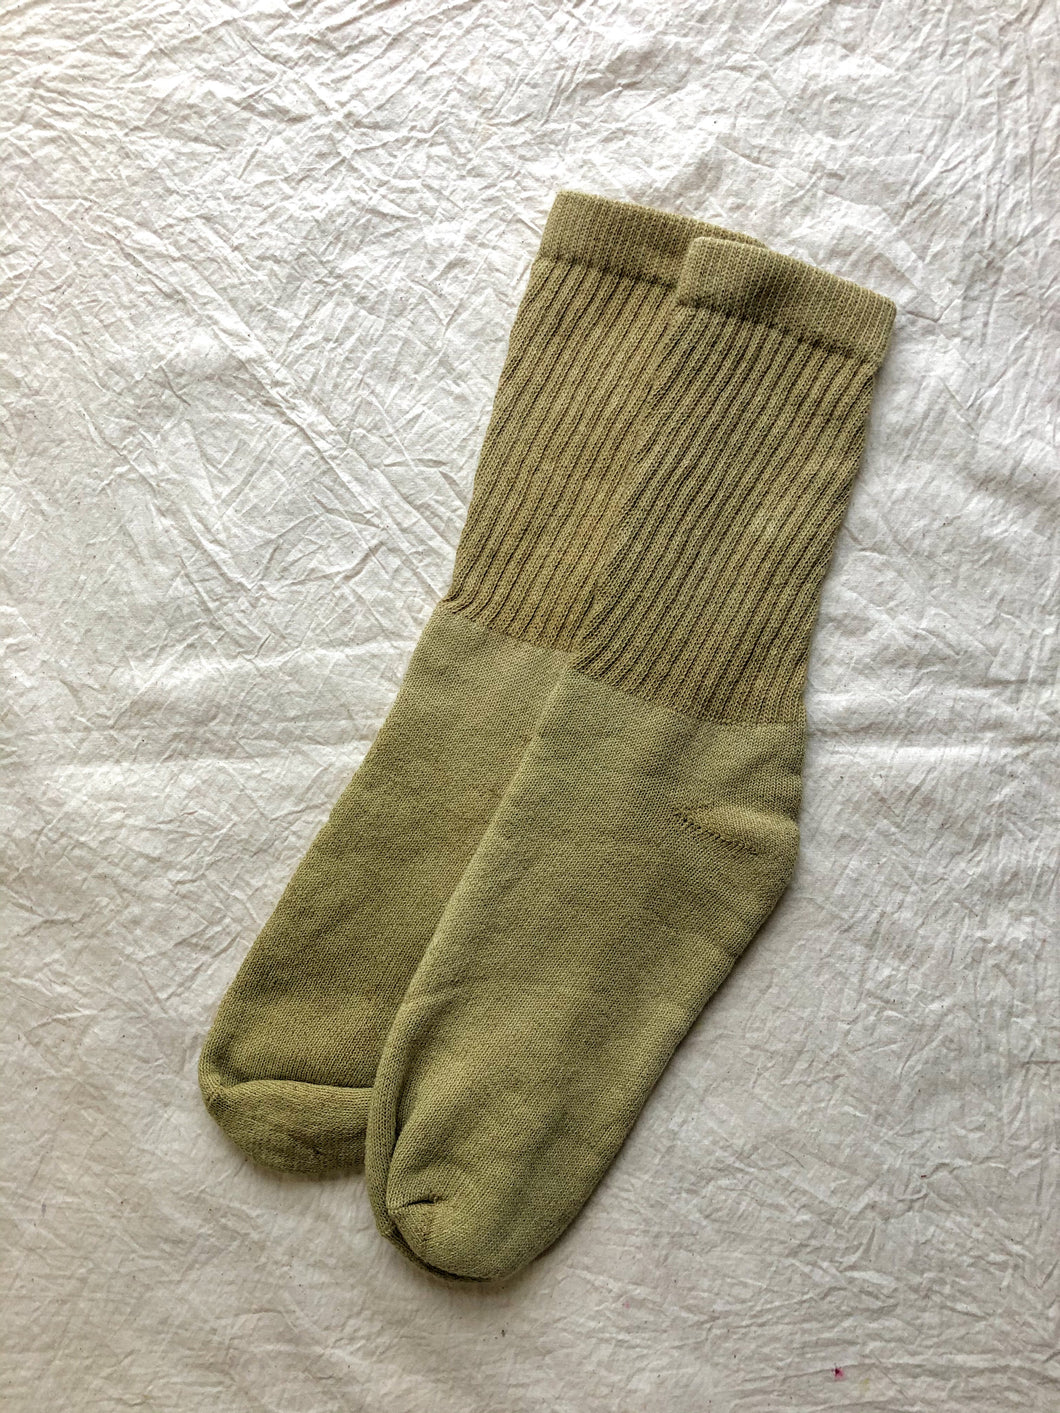 Botanical Dye Organic Cotton Socks - Wheat - M